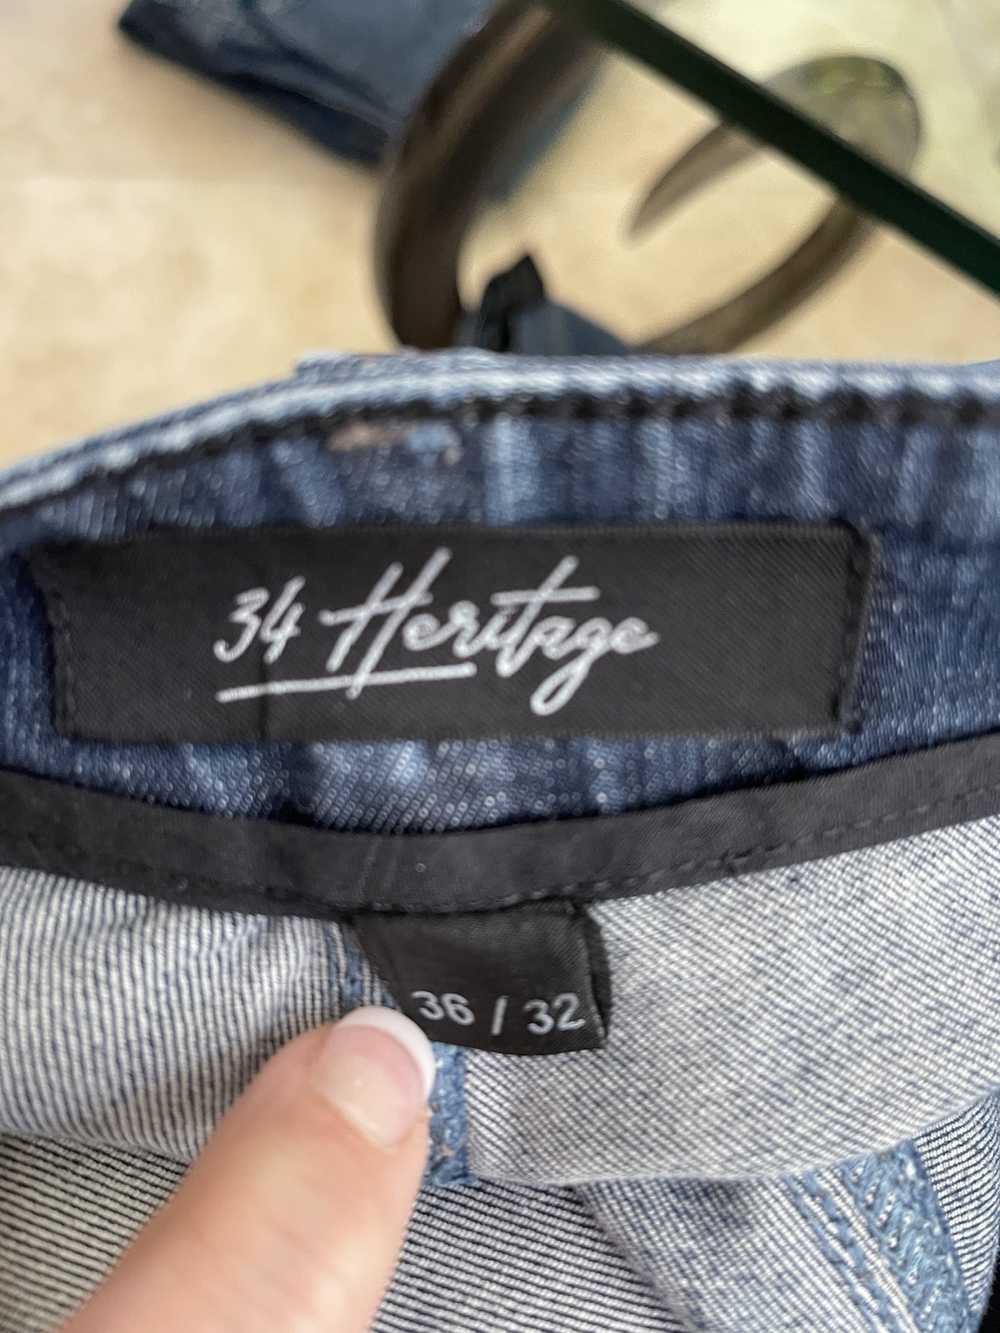 34 Heritage Men's 34 Heritage Jeans - image 2